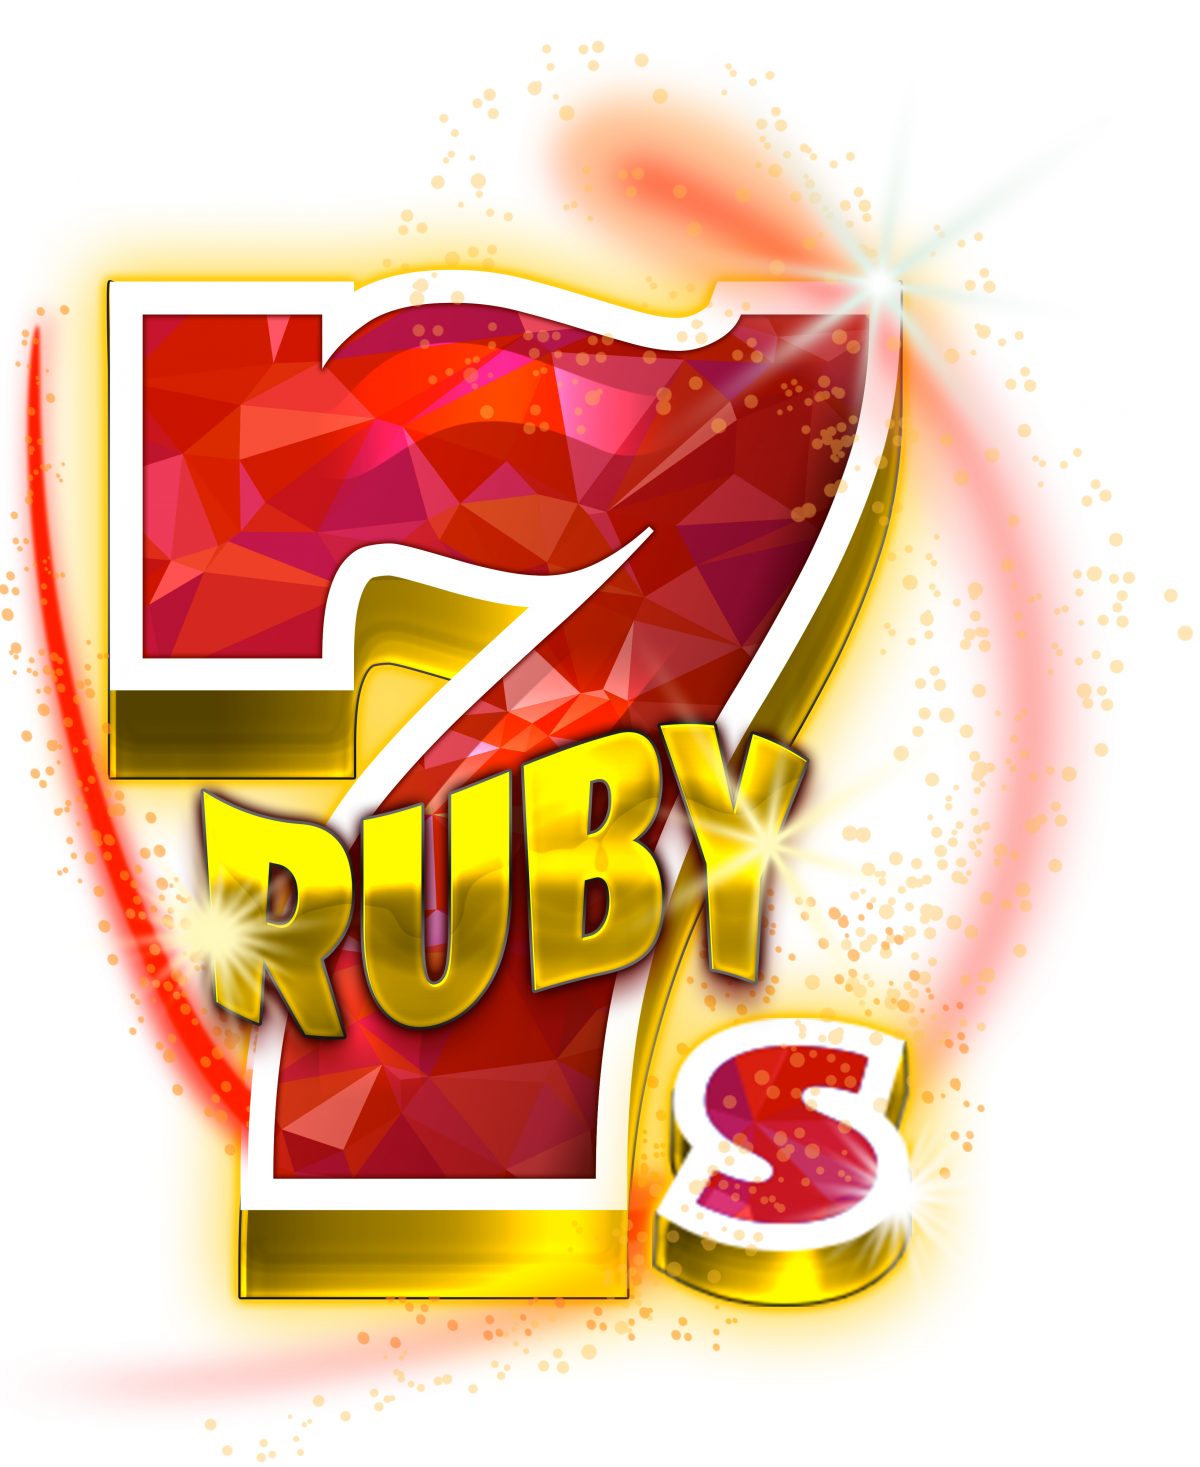 Ruby's 7